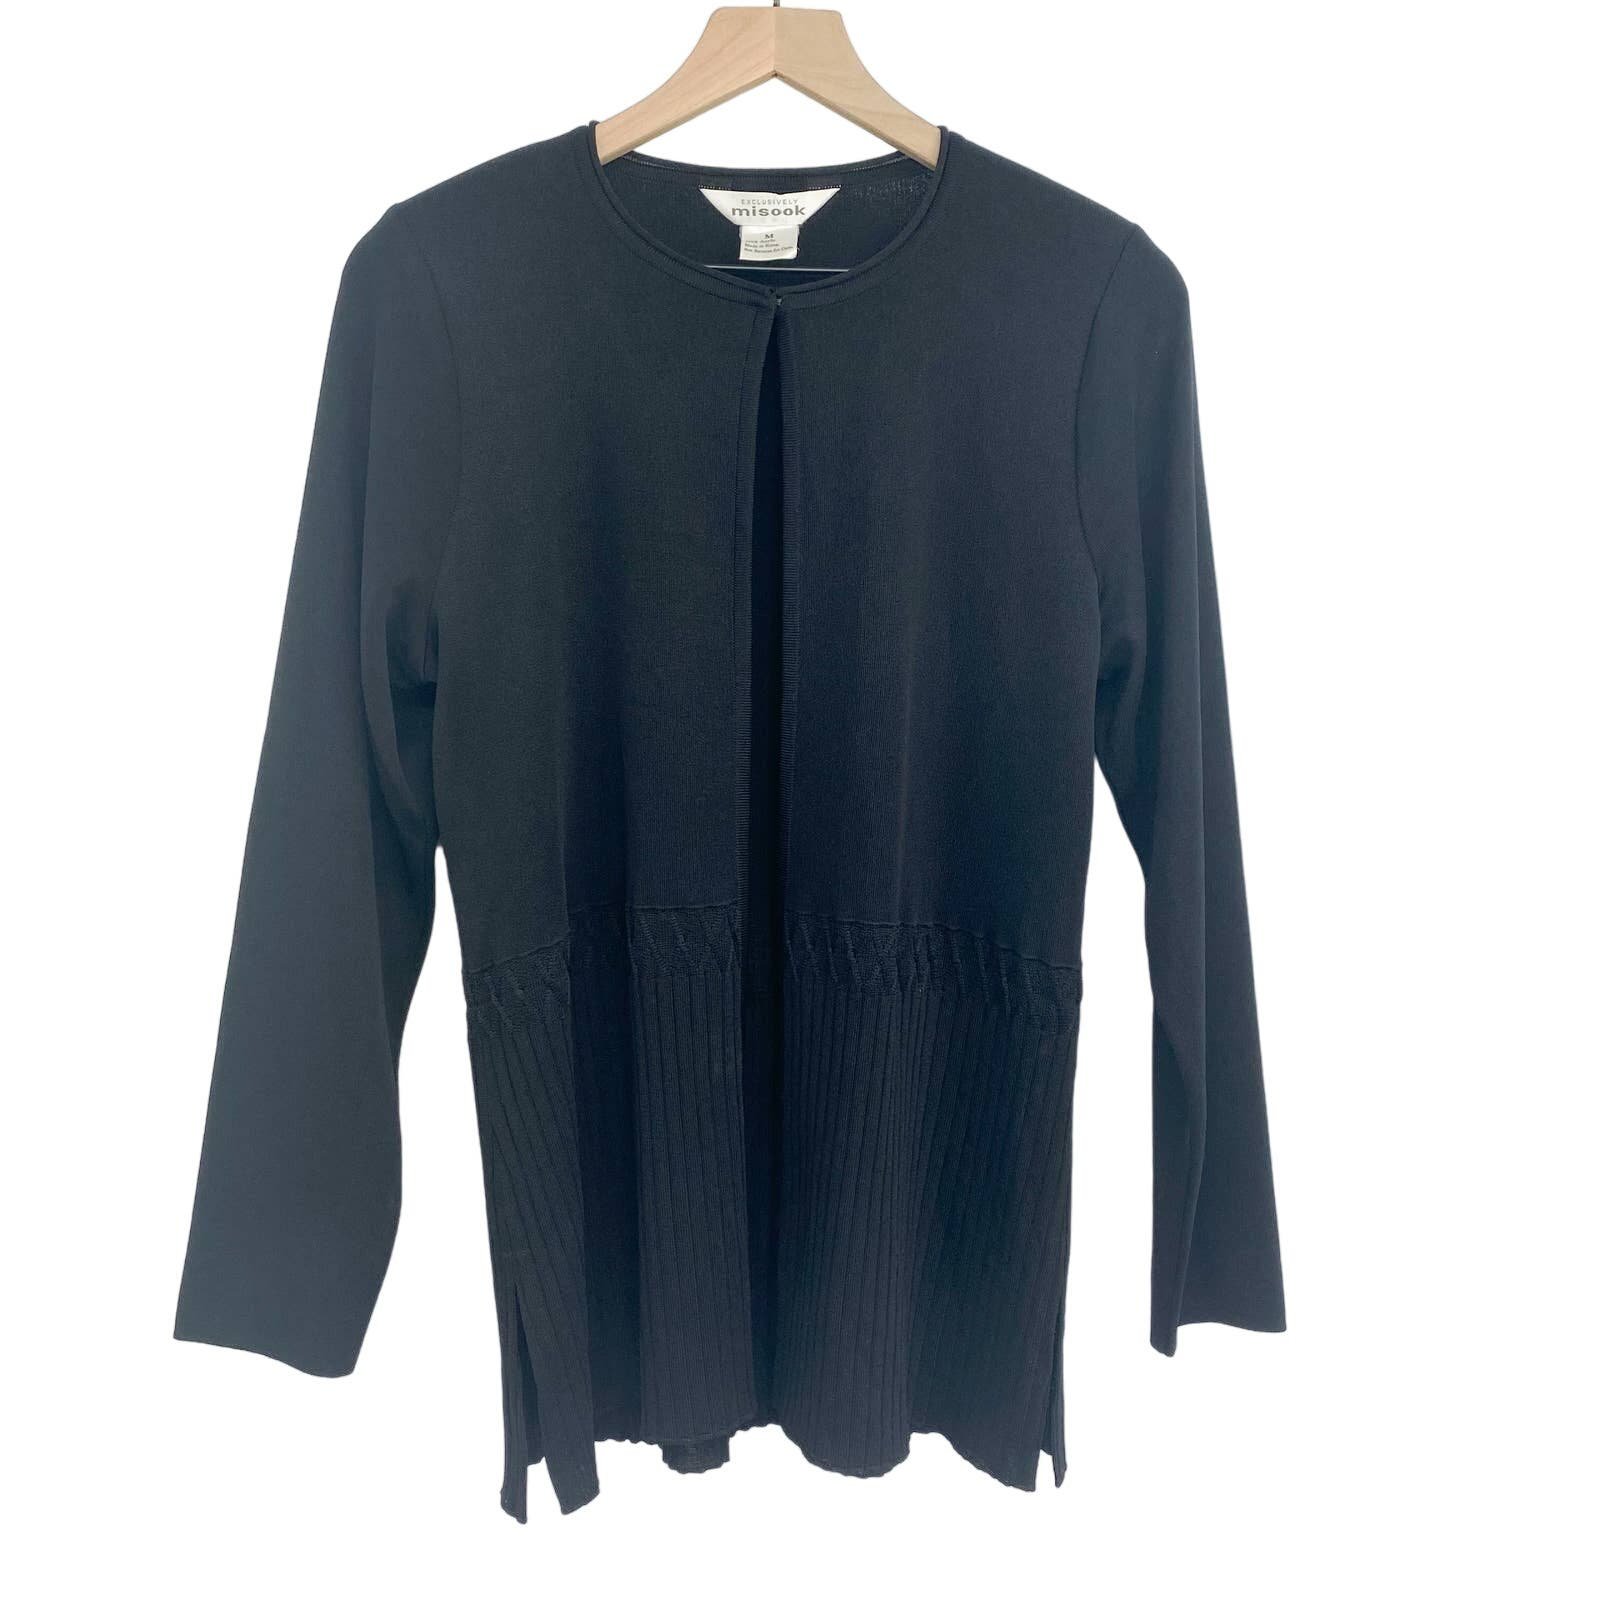 Misook Cardigan Pleated Ponte Knit Black Cardi Sweater Top Closure Womens Medium hSWA1fJBM